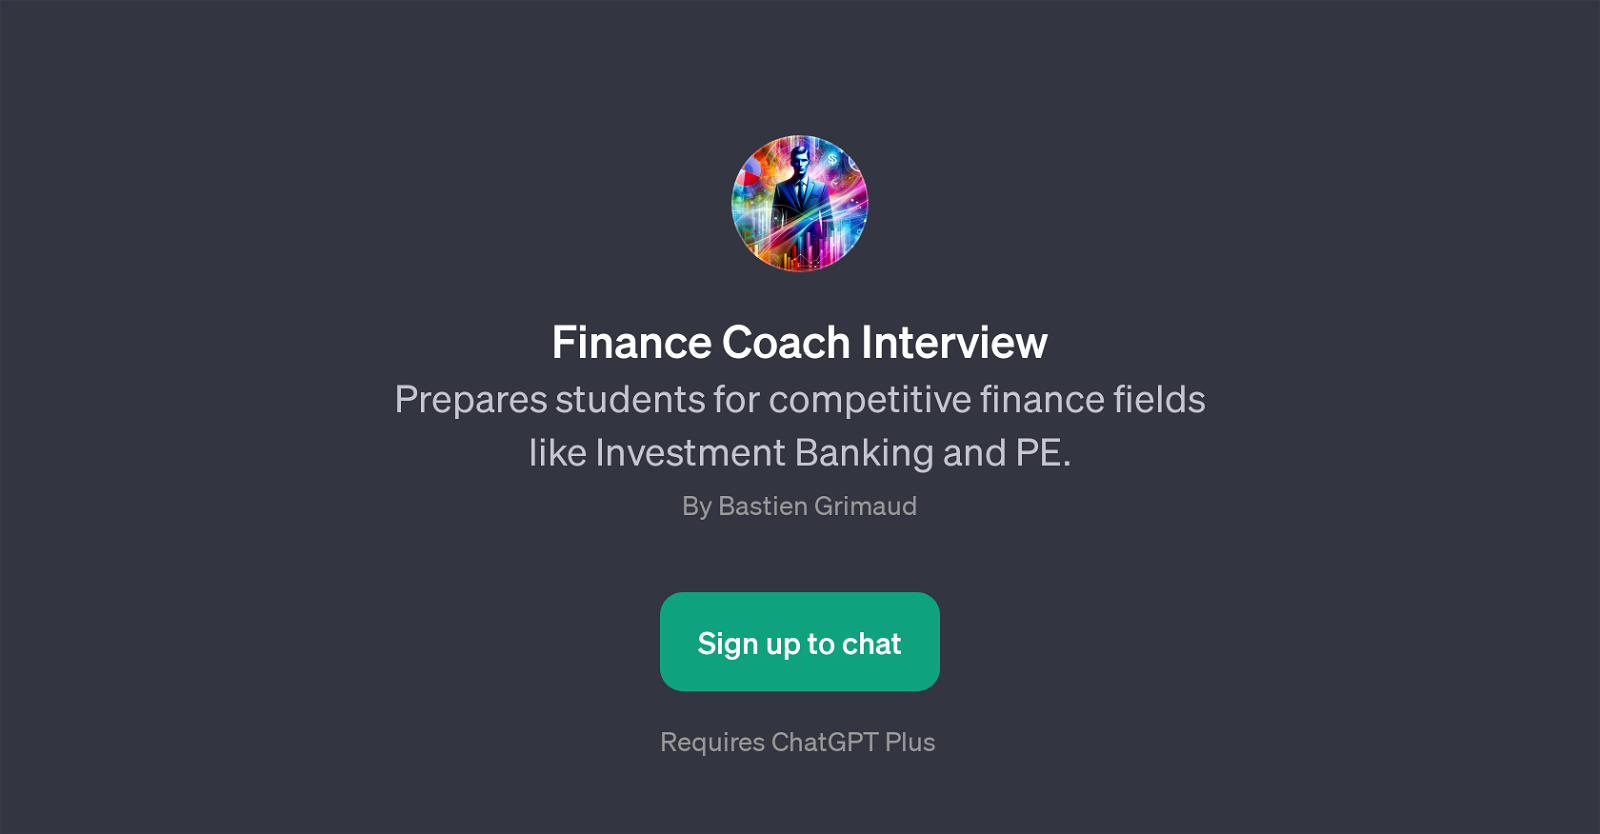 Finance Coach Interview website